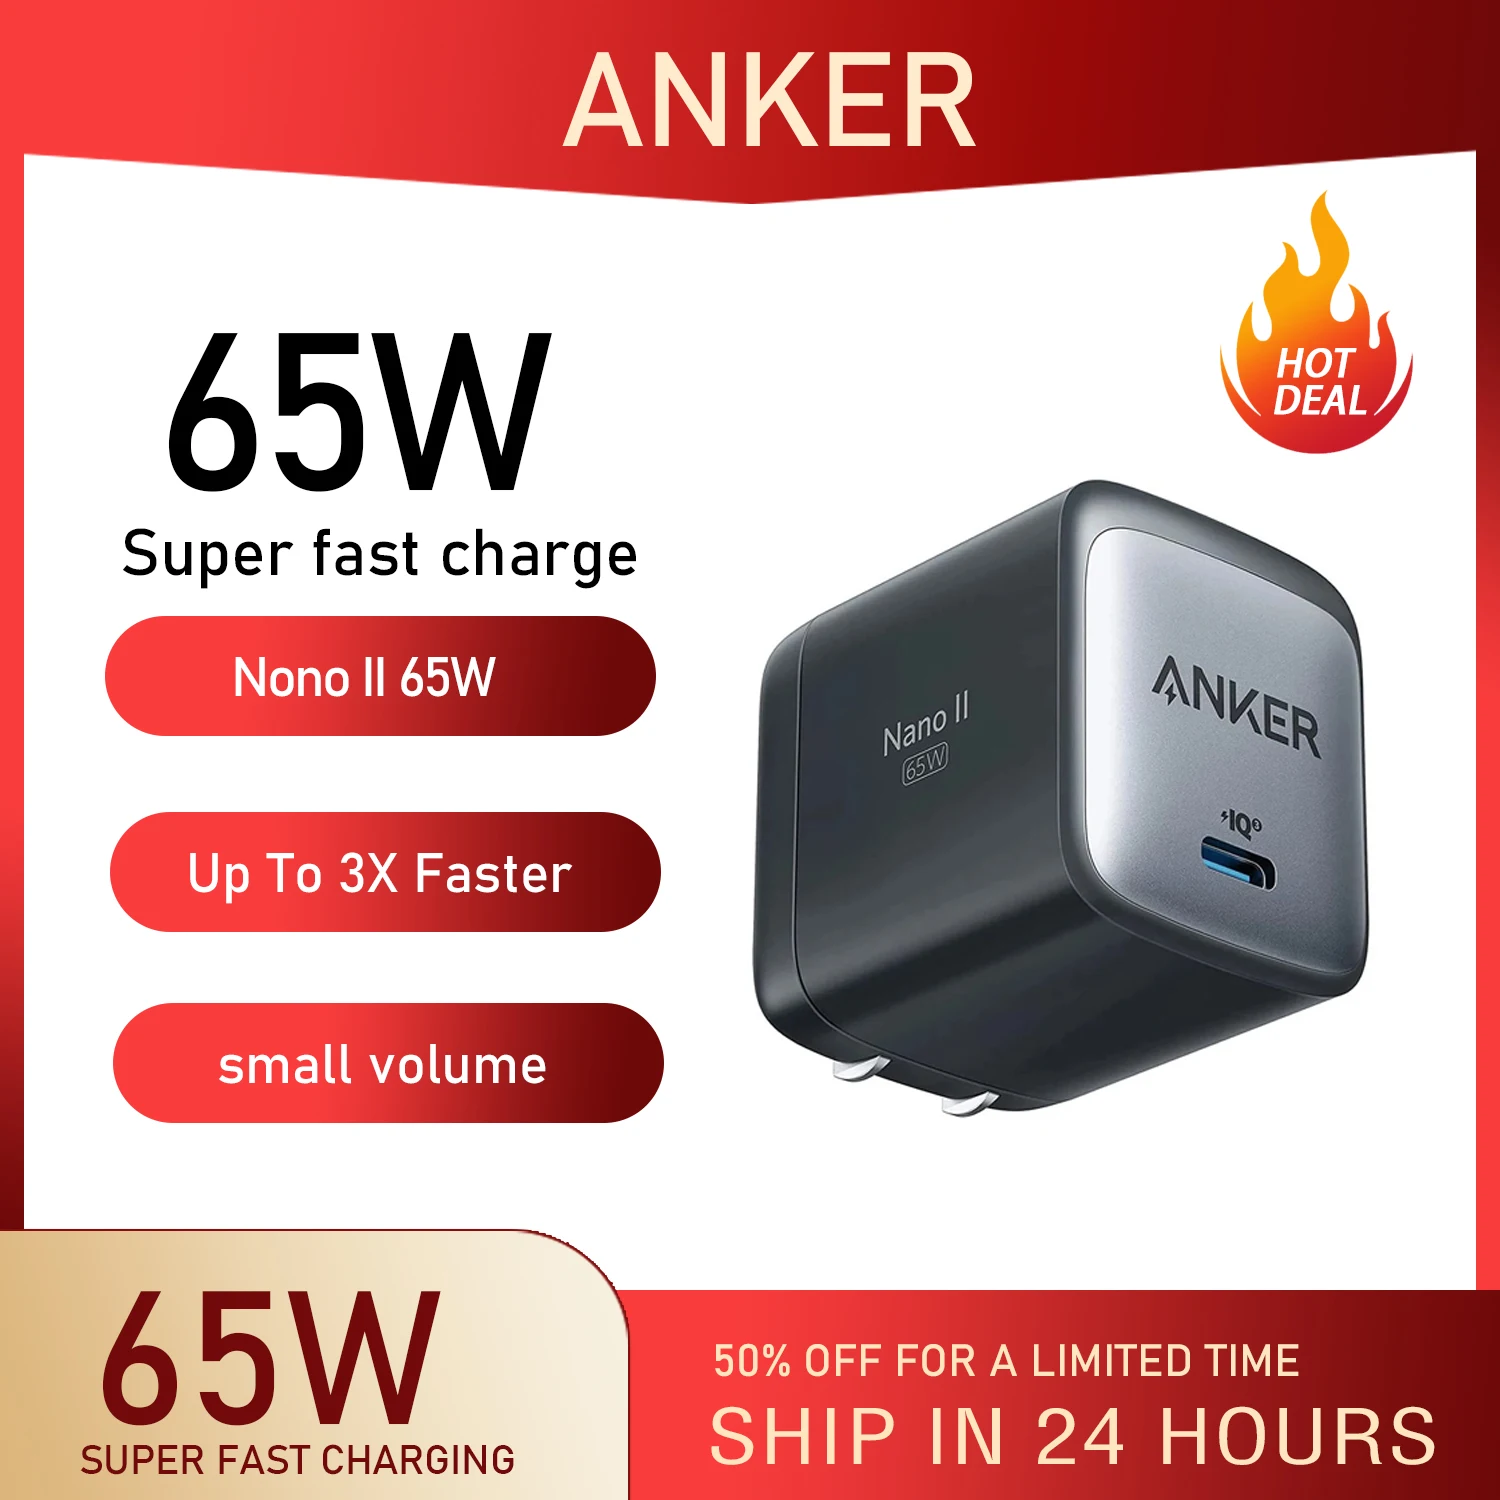 

Anker Nano II 65W USB C Charger GaN2 Fast Charge 45W/30W for IPhone 12/12 Mini/12 Pro/12 Pro Max/11, Pixel 4/3, IPad Pro